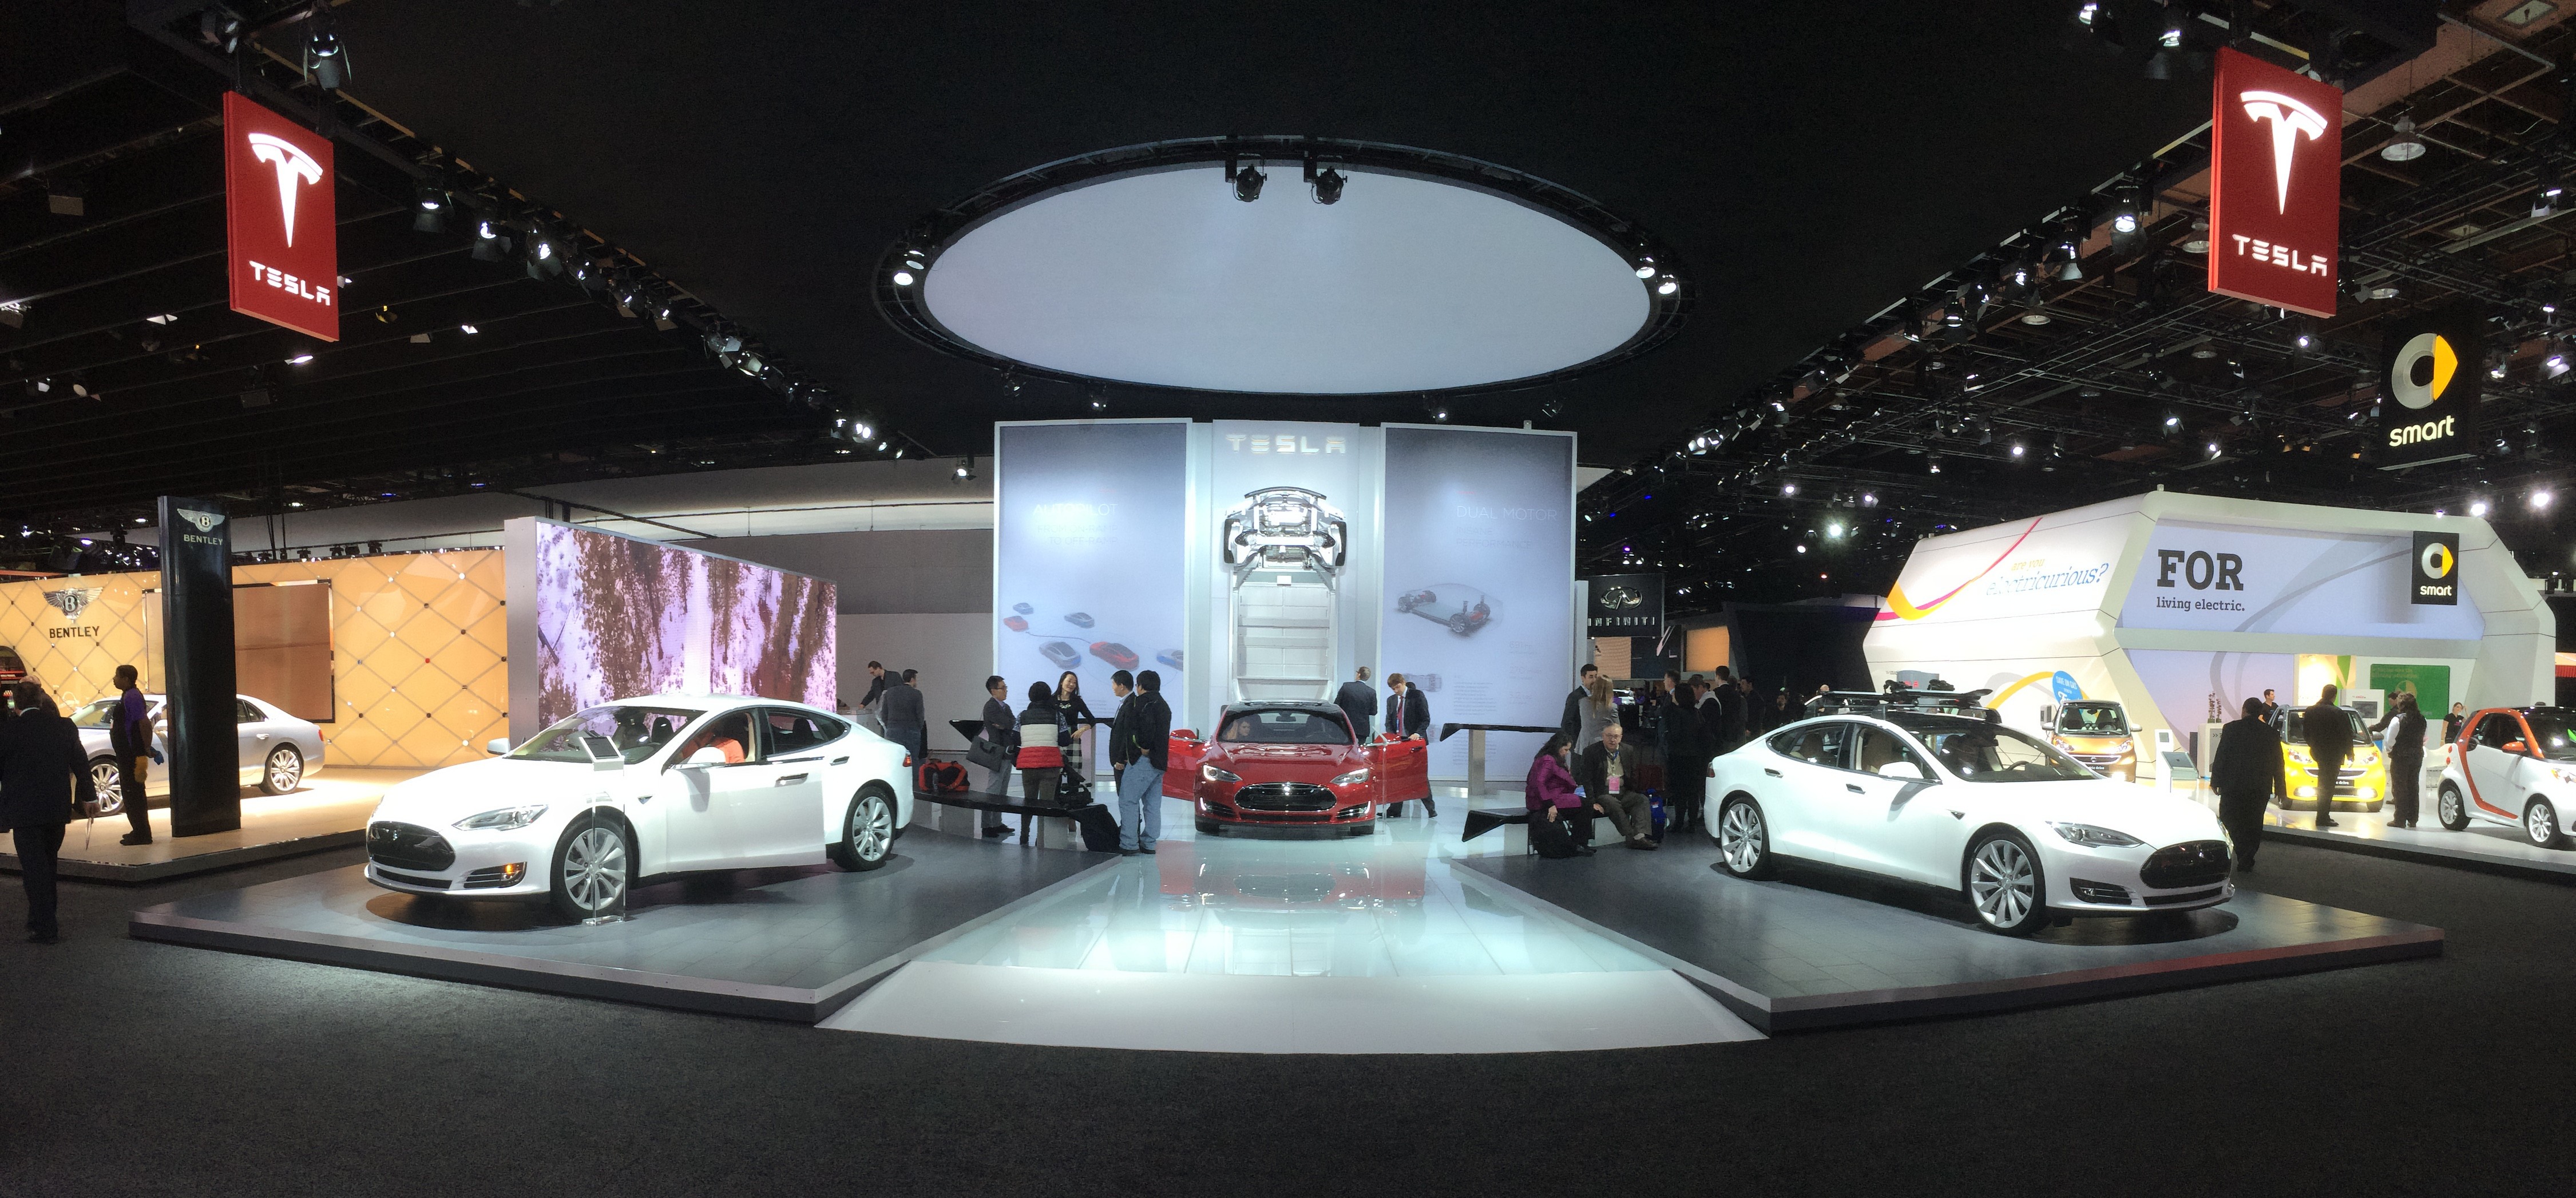 Detroit Tesla booth 2015